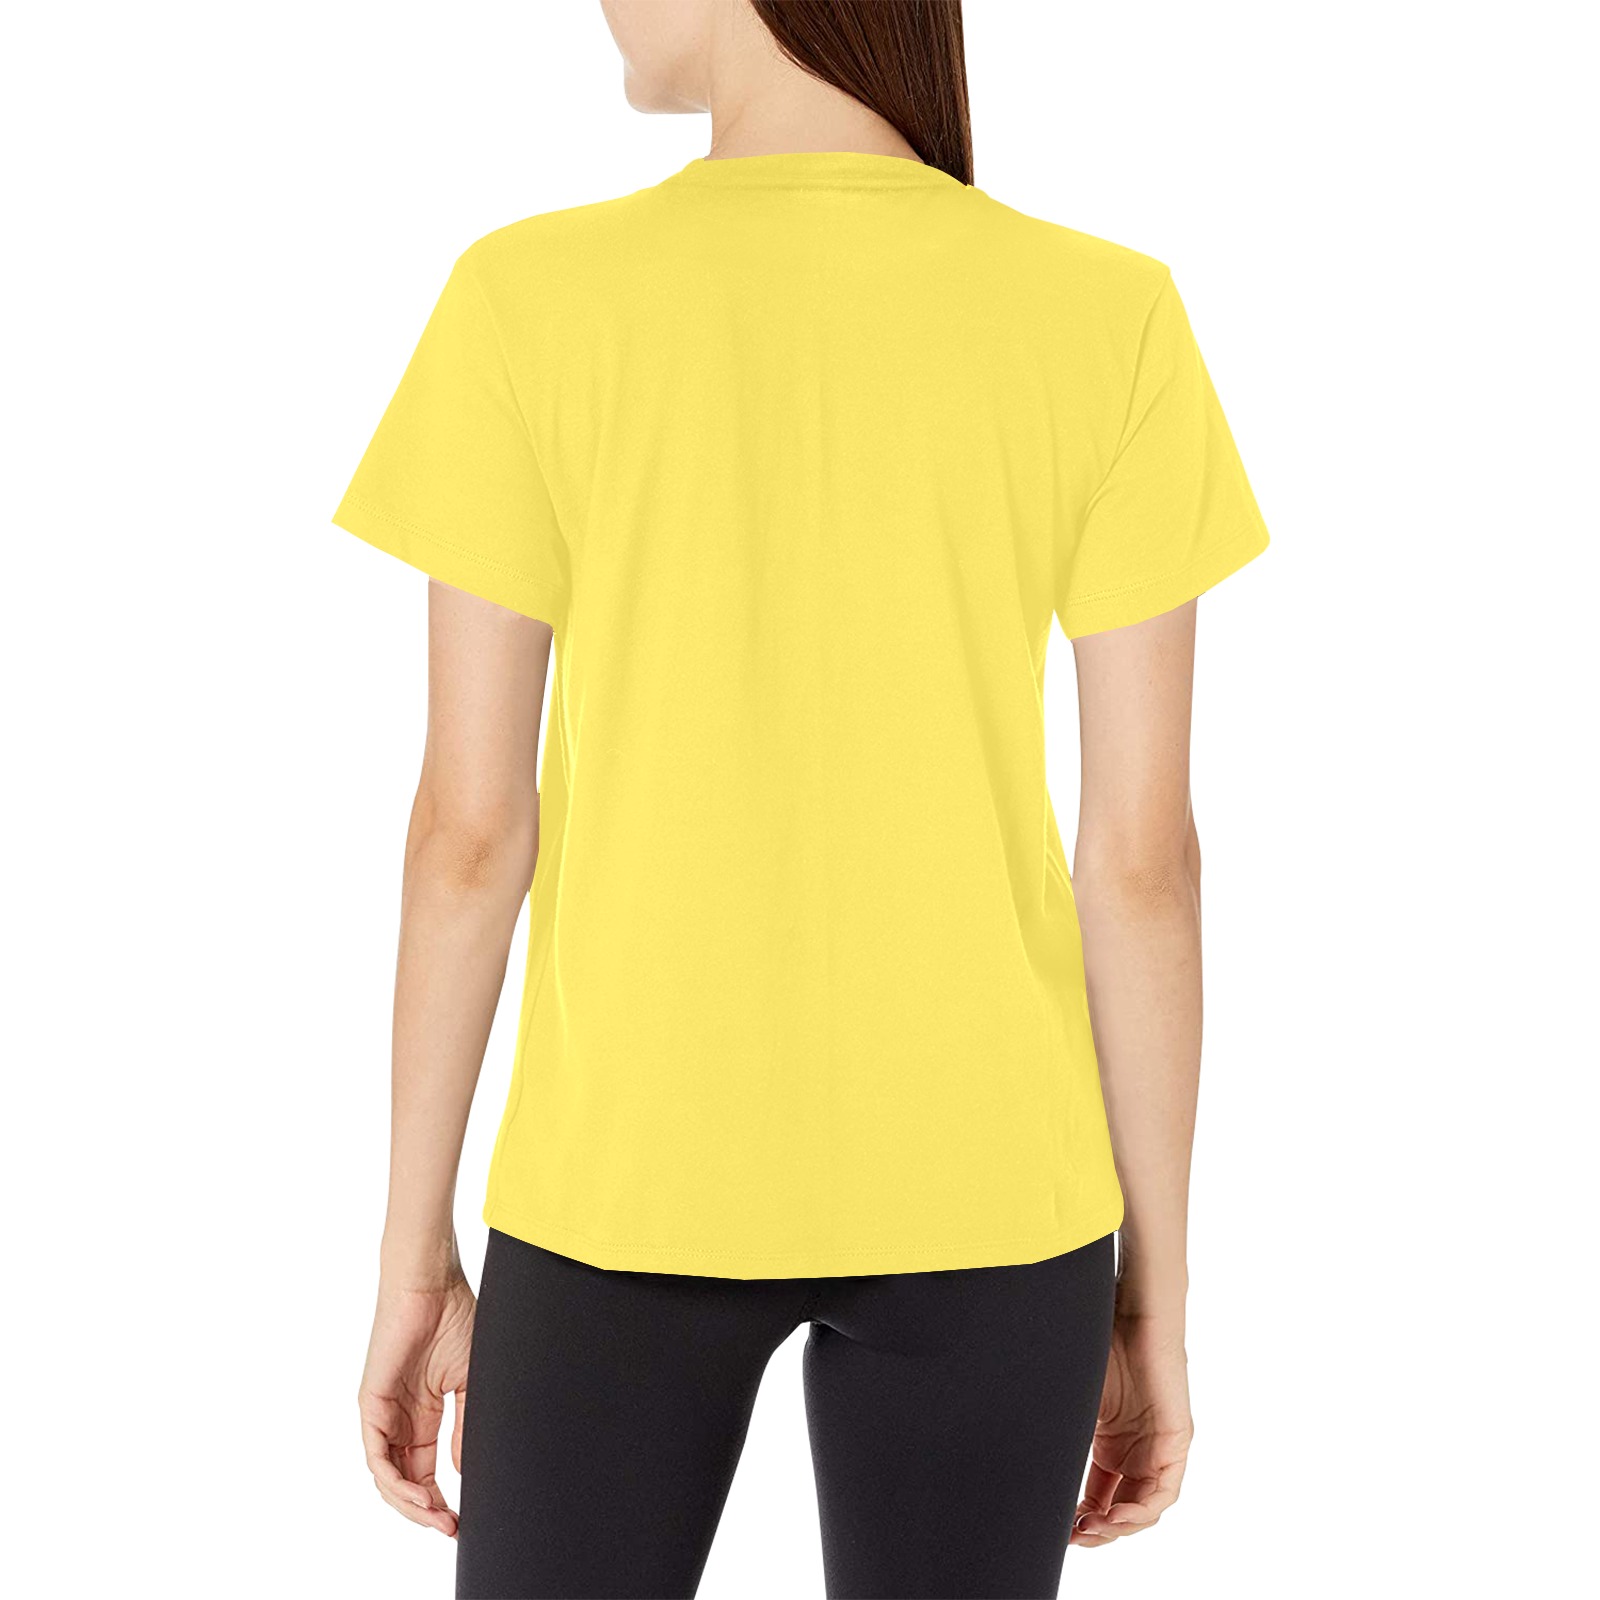 1 - Yahweh Be Praised Yellow T-Shirt Women Women's All Over Print Crew Neck T-Shirt (Model T40-2)